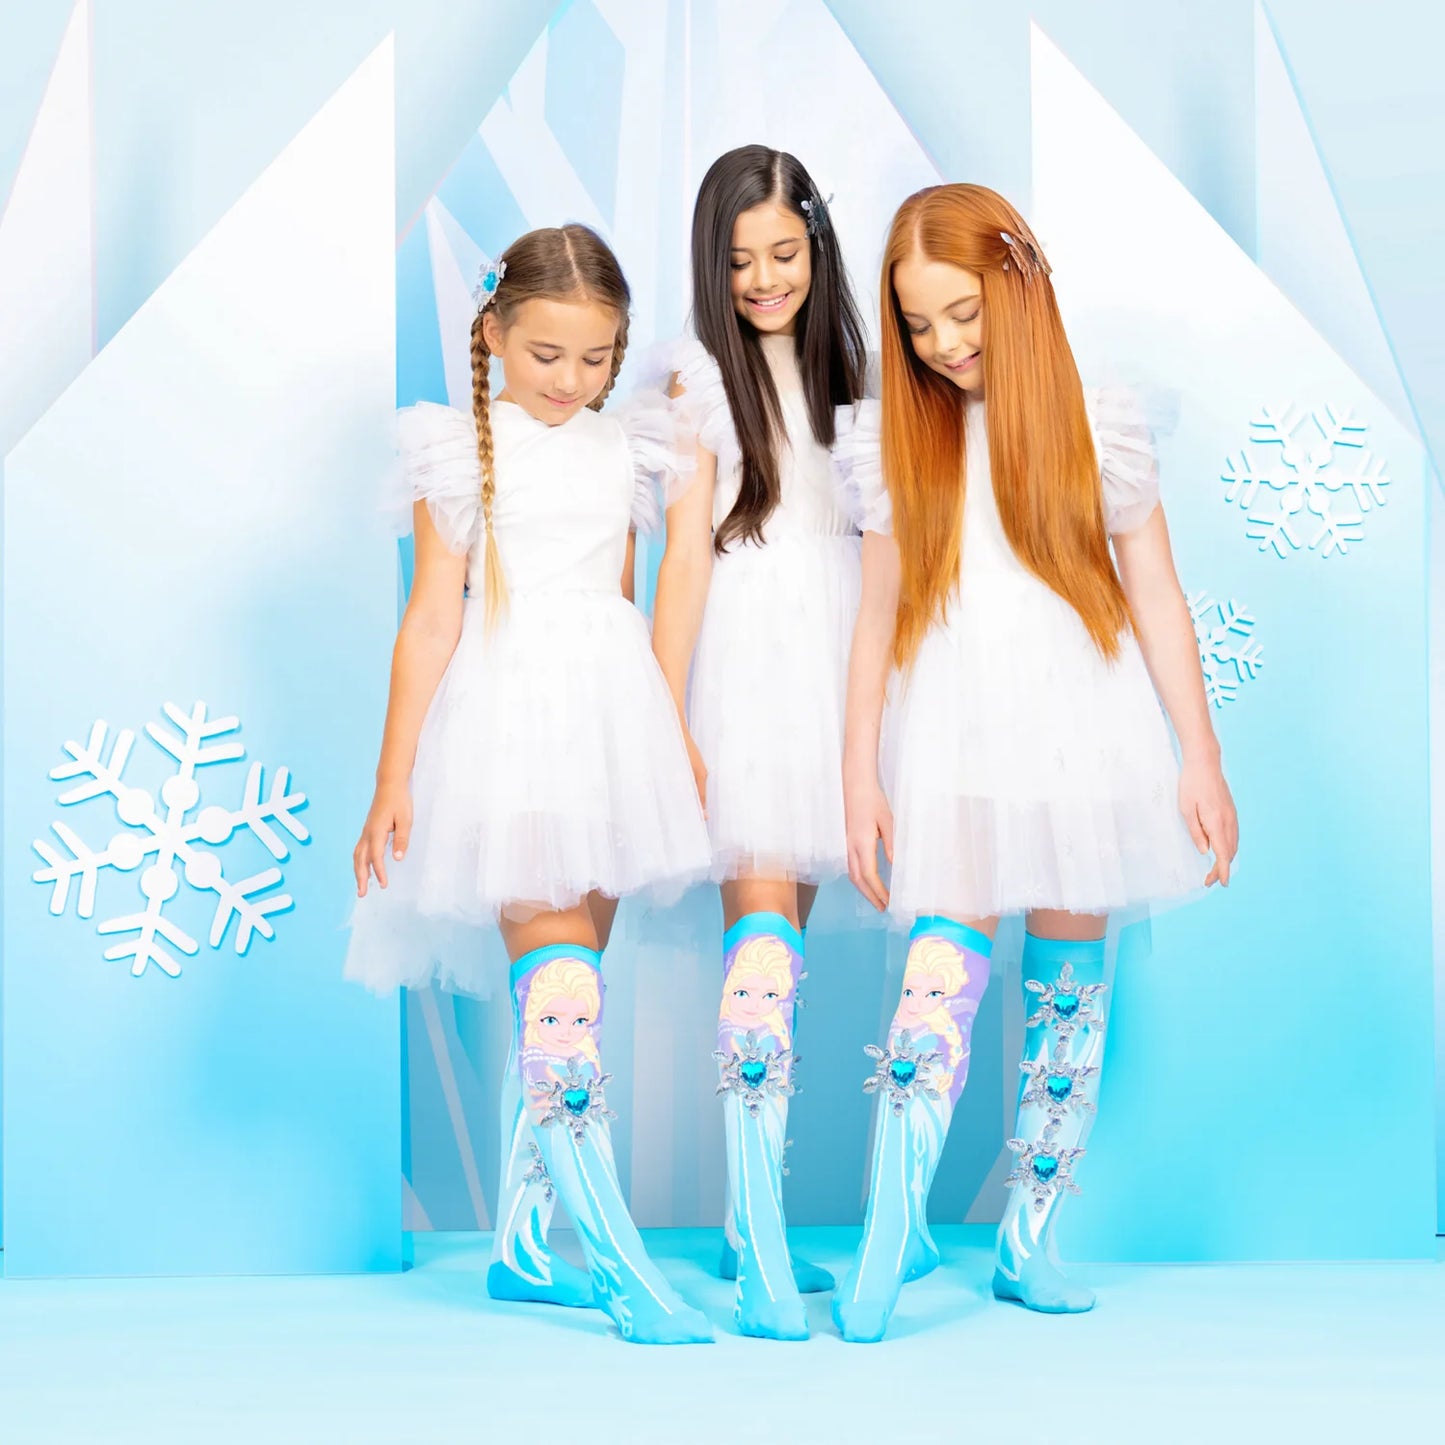 Socks - Frozen Socks